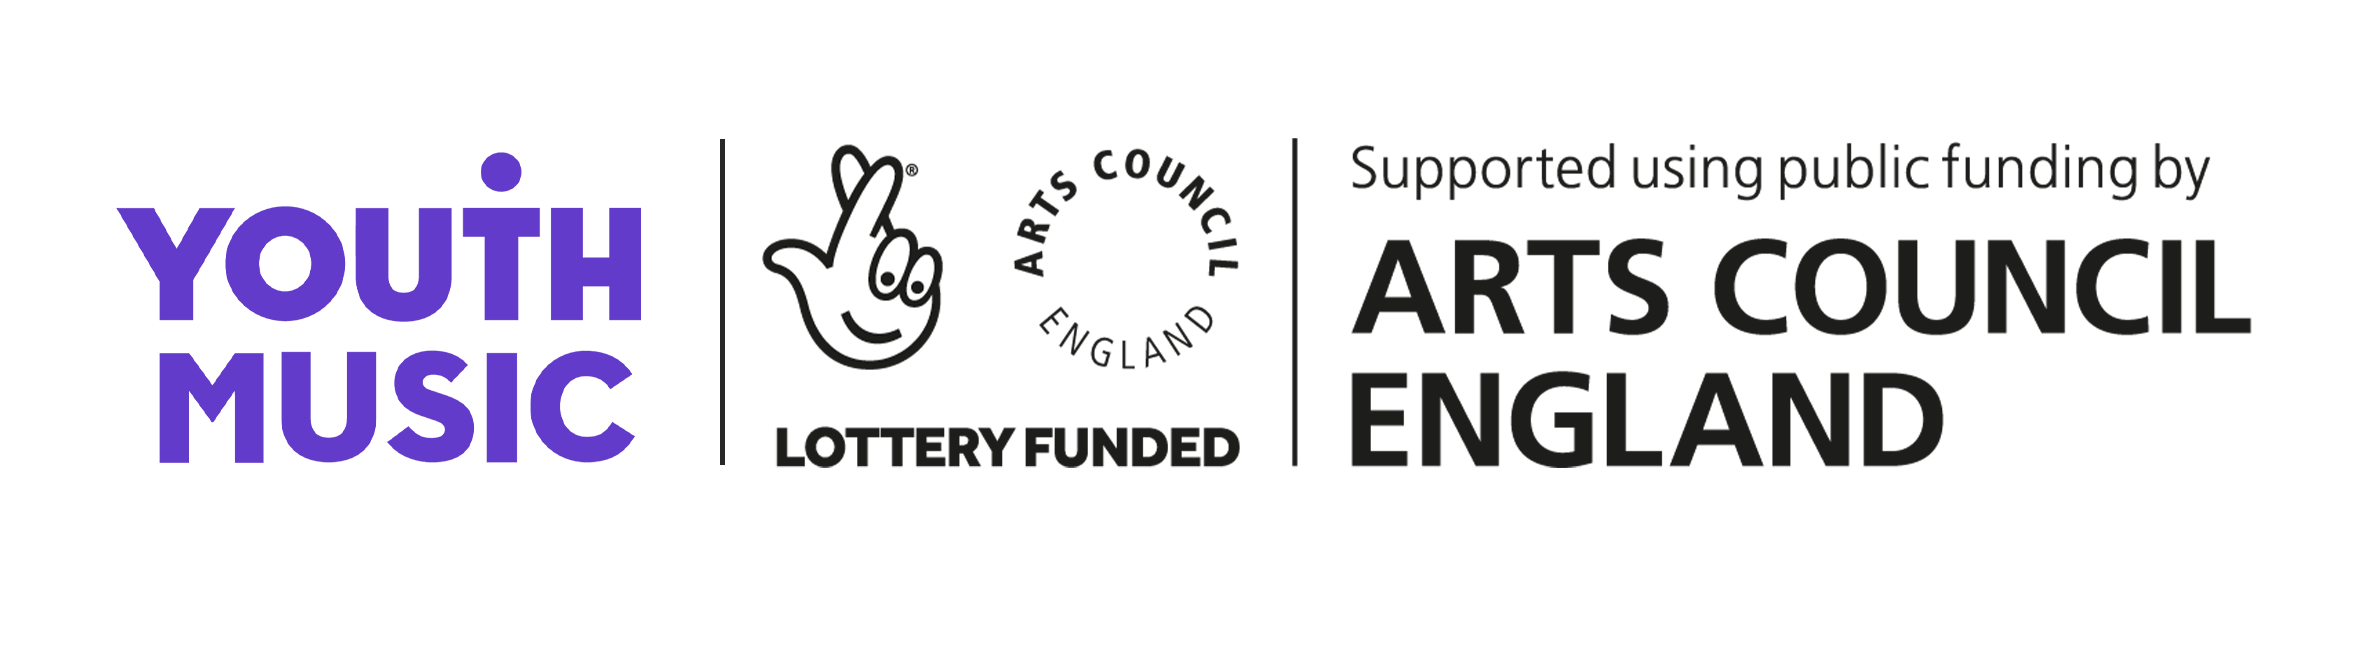 Lottery grant award logo dark